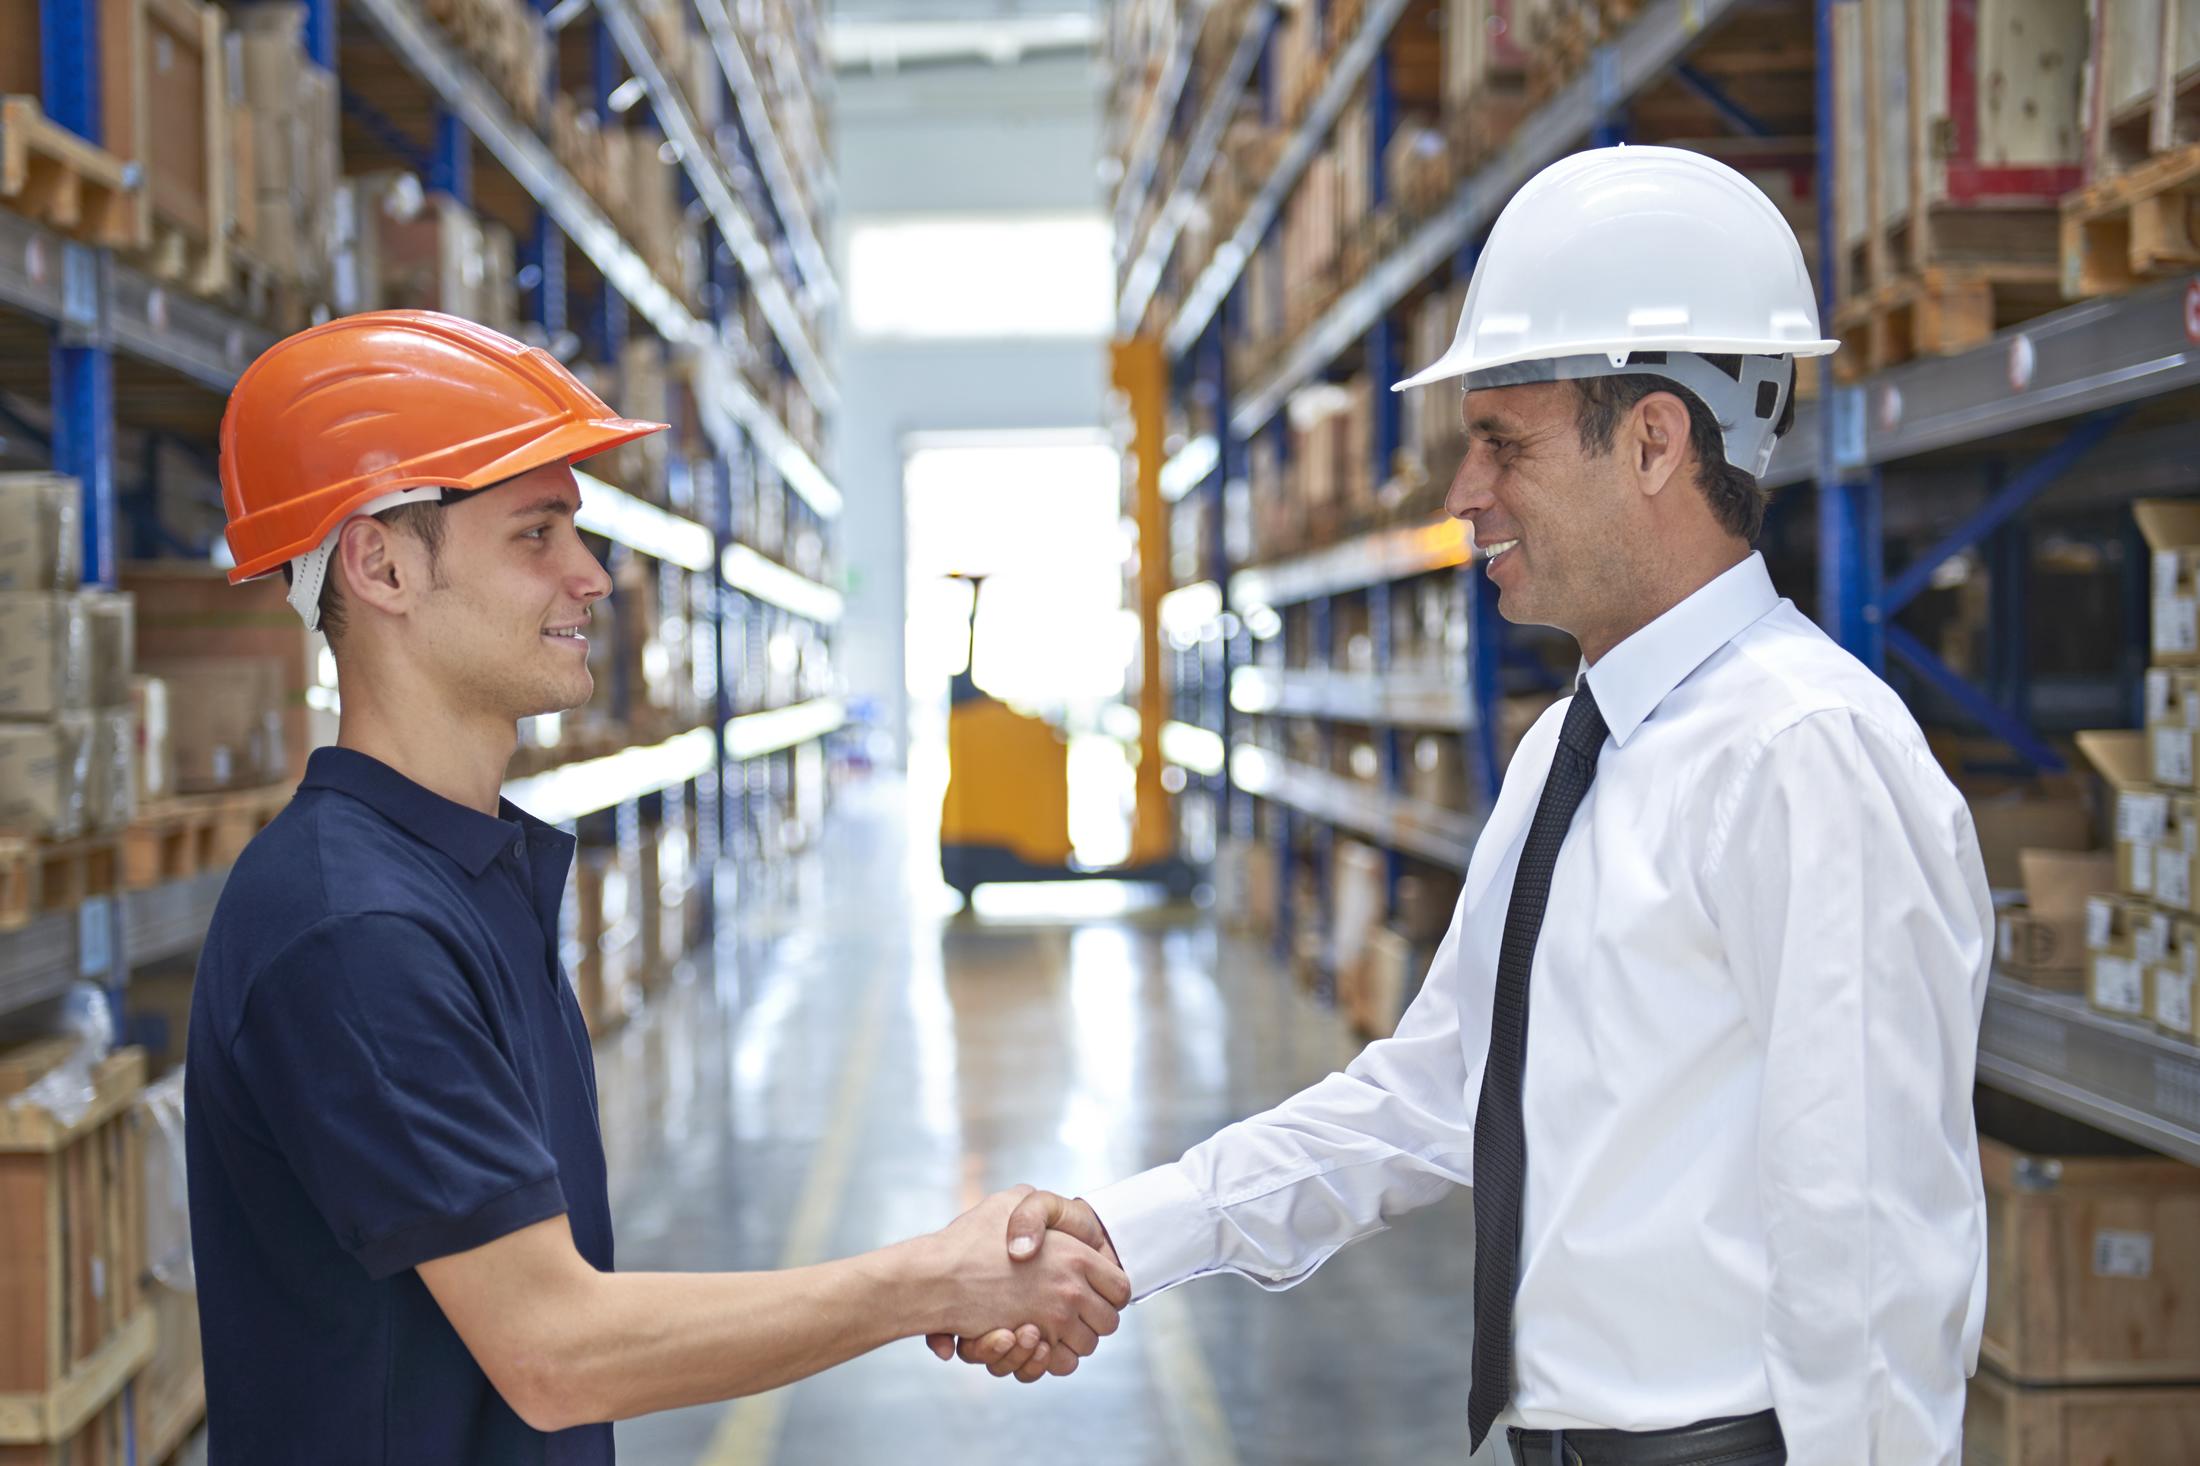 Two men shaking hands in a warehouse wearing hard hats